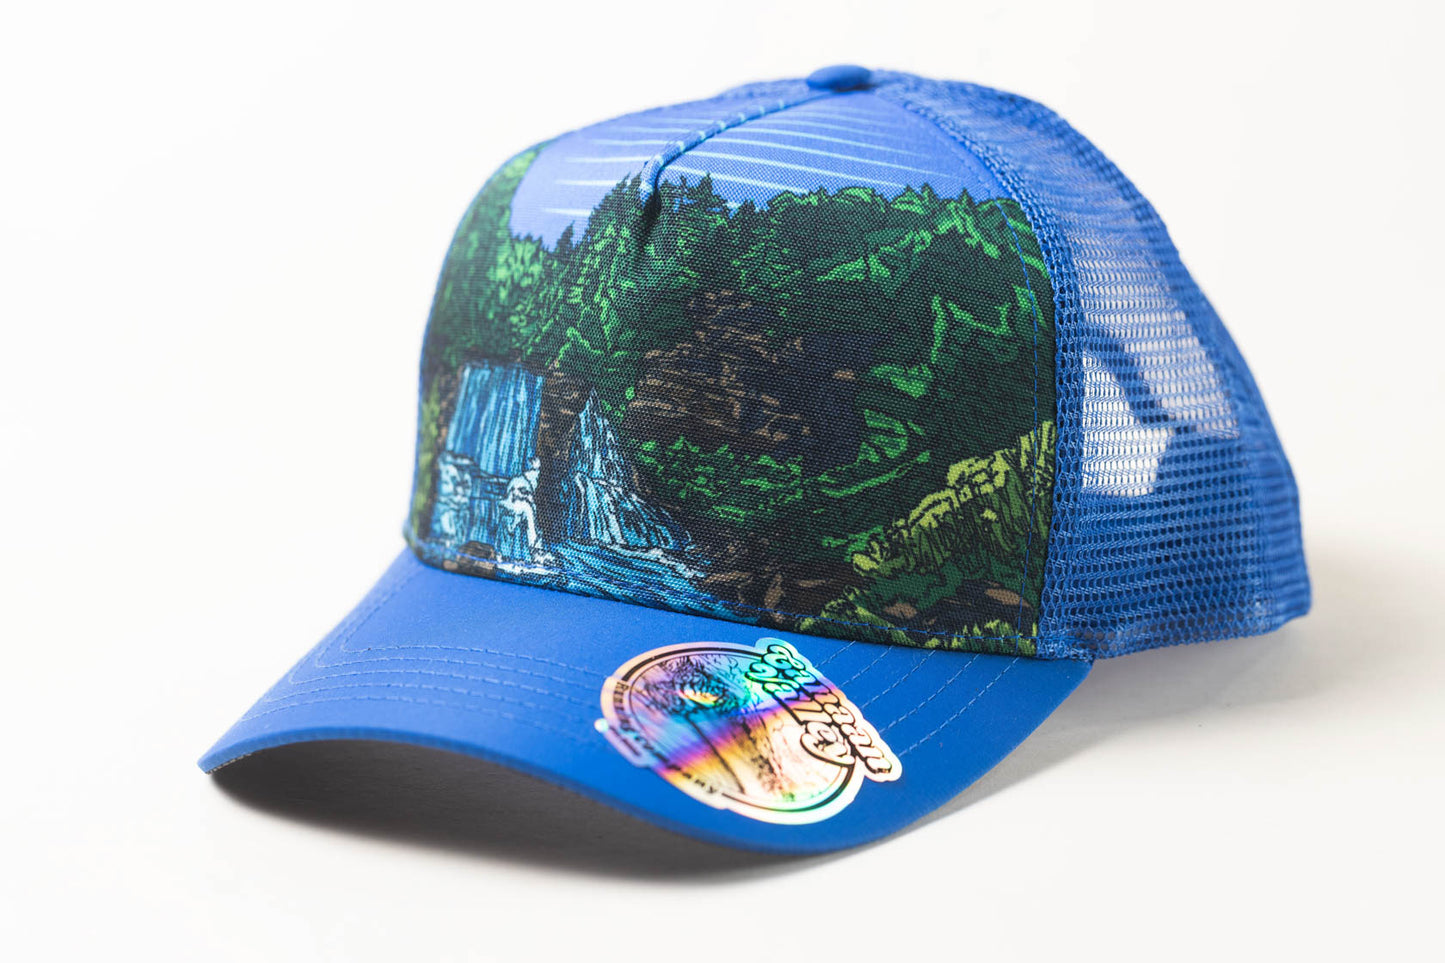 Trucker Hat – Blackwater Falls Blue